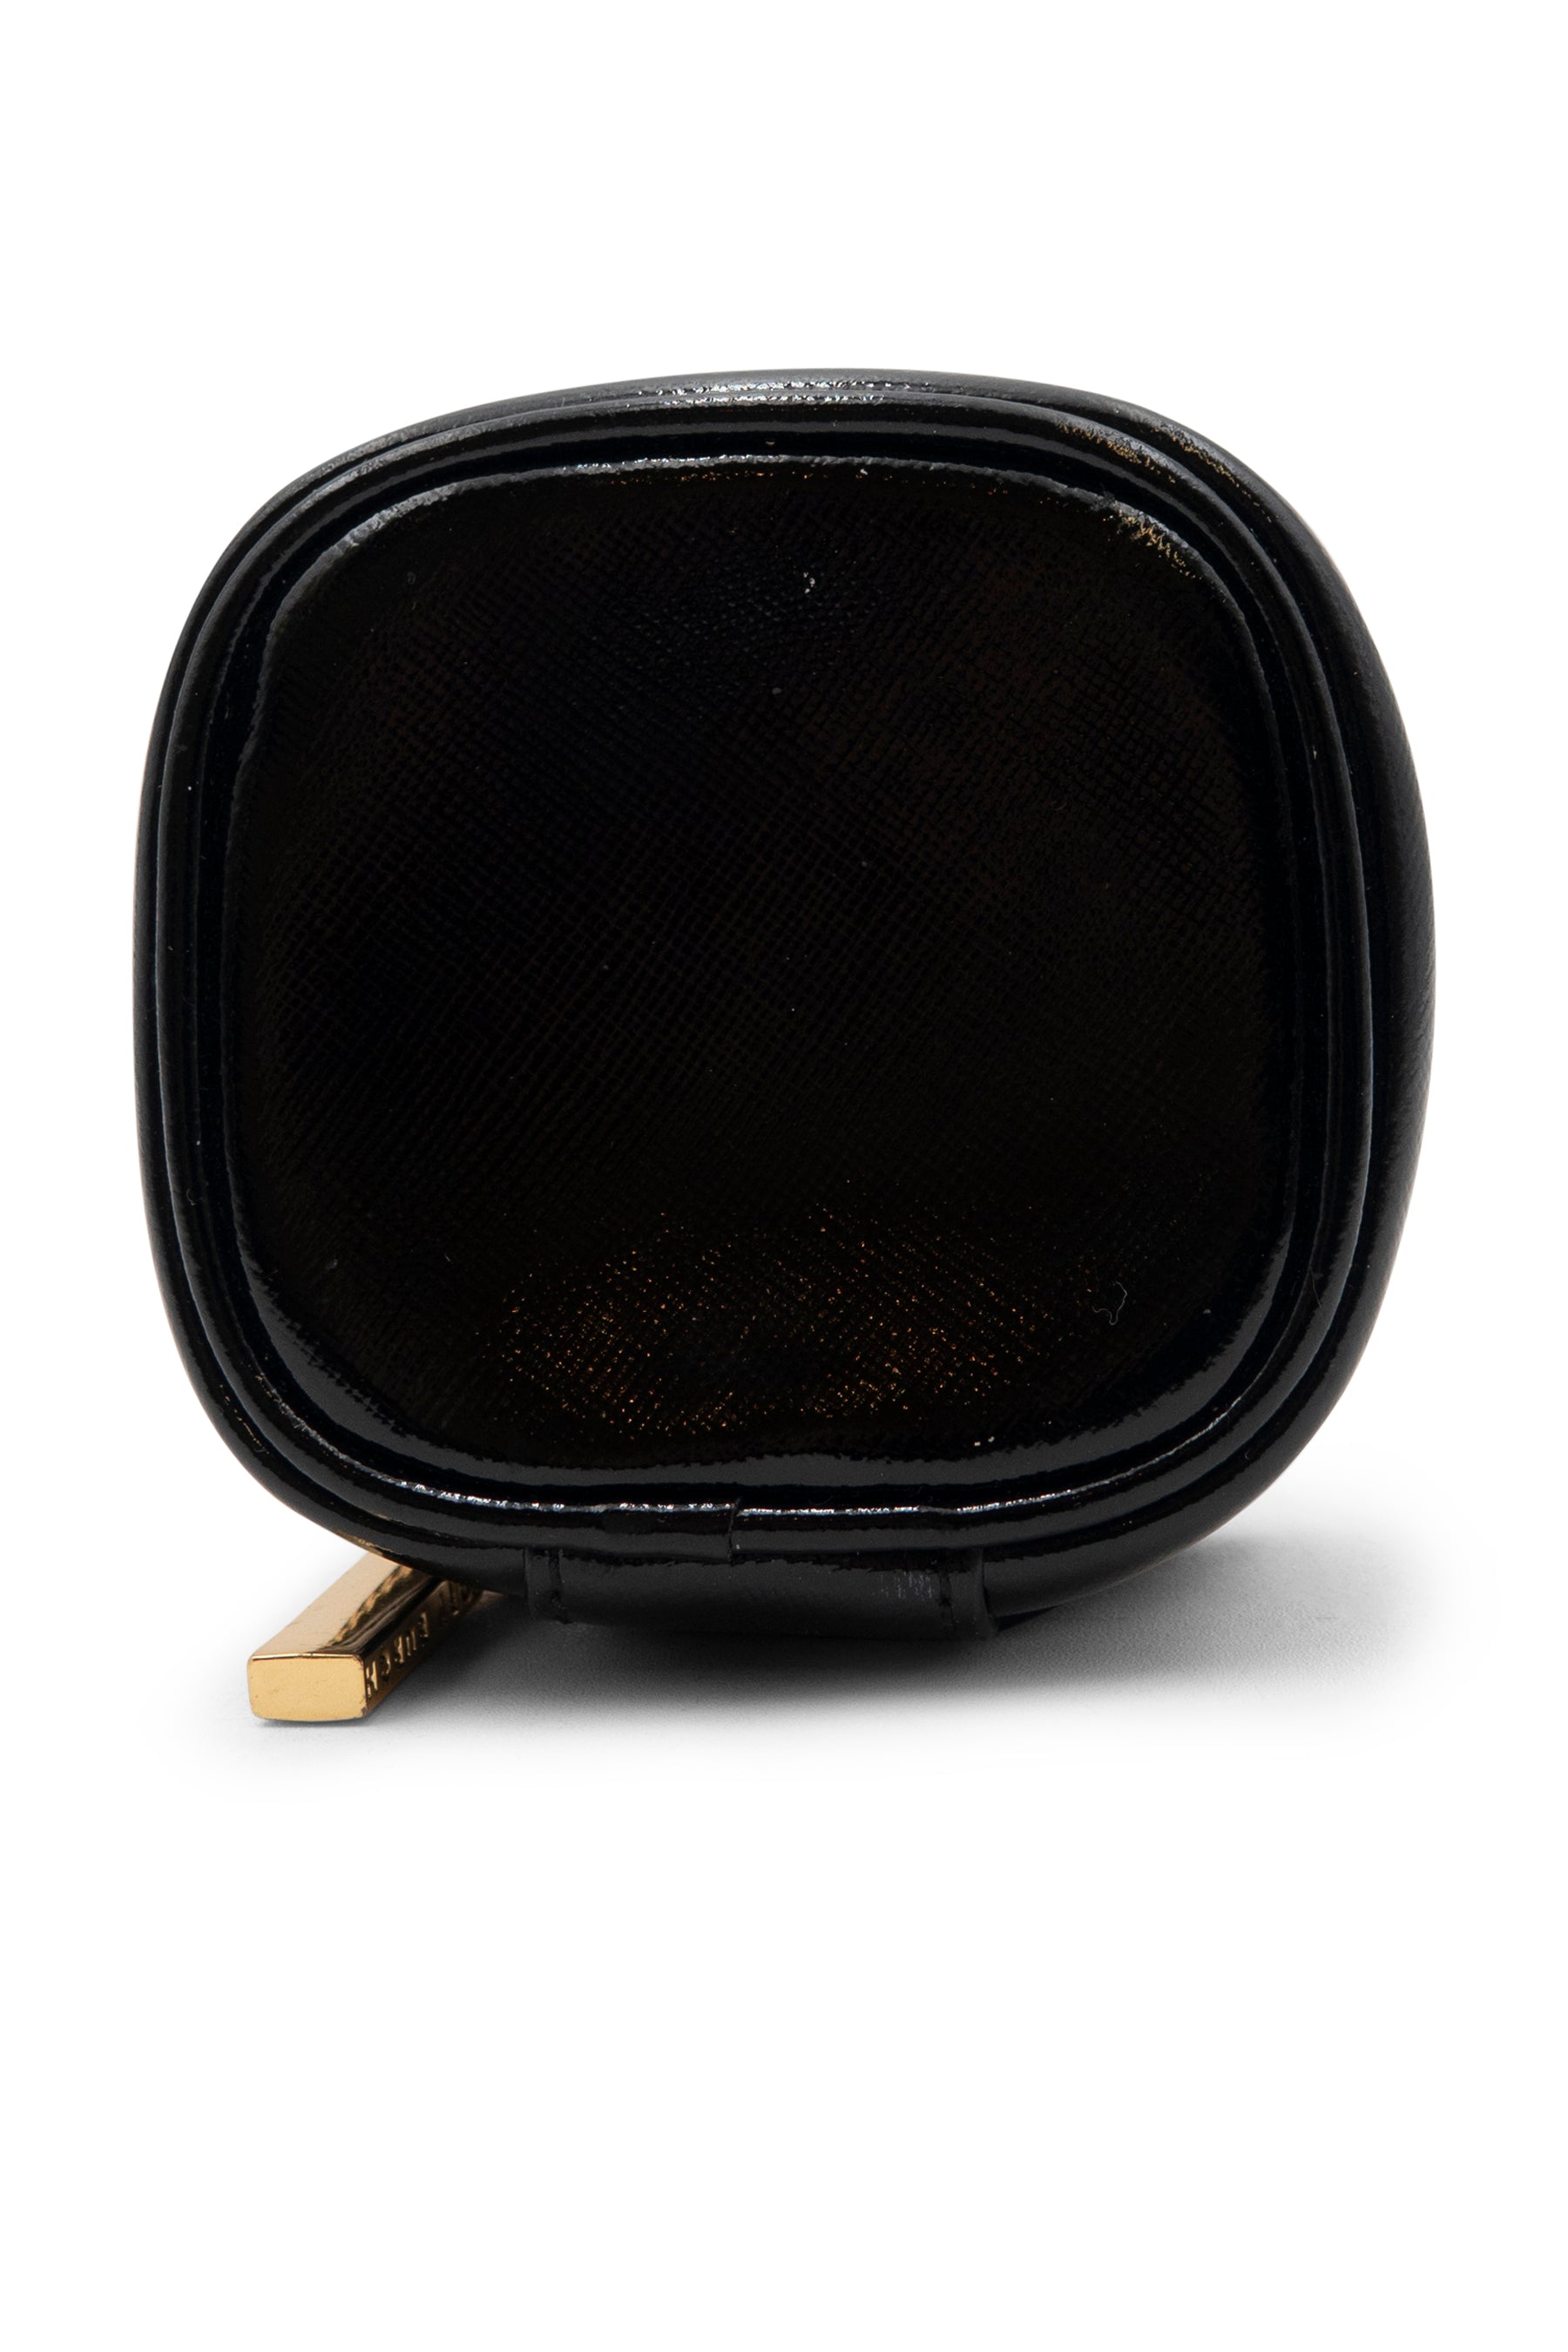 Tory Burch Patent leather cosmetic/clutch bag - Women's handbags